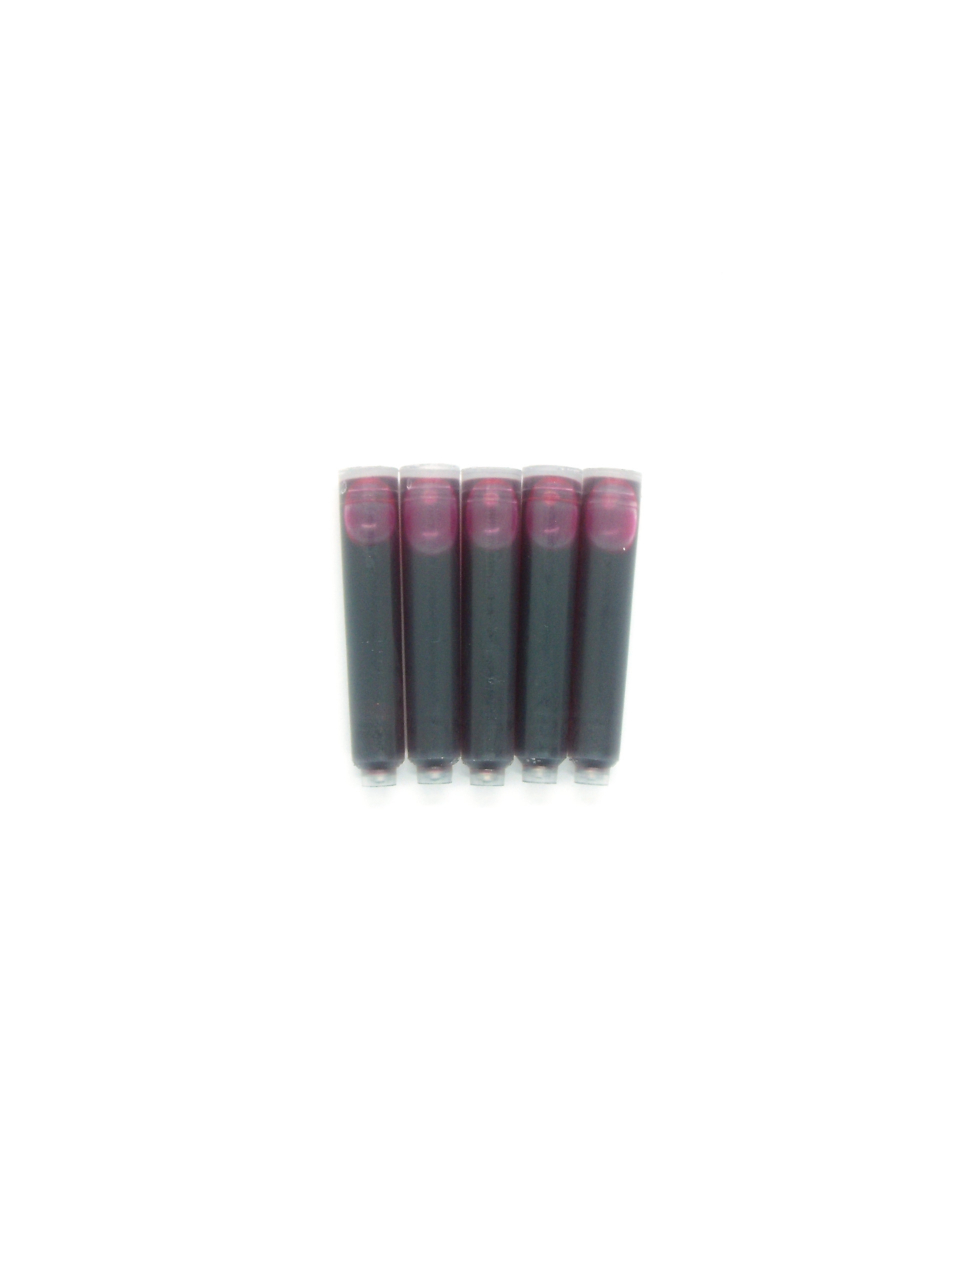 PenConverter Ink Cartridges For Edison Fountain Pens (Pink)